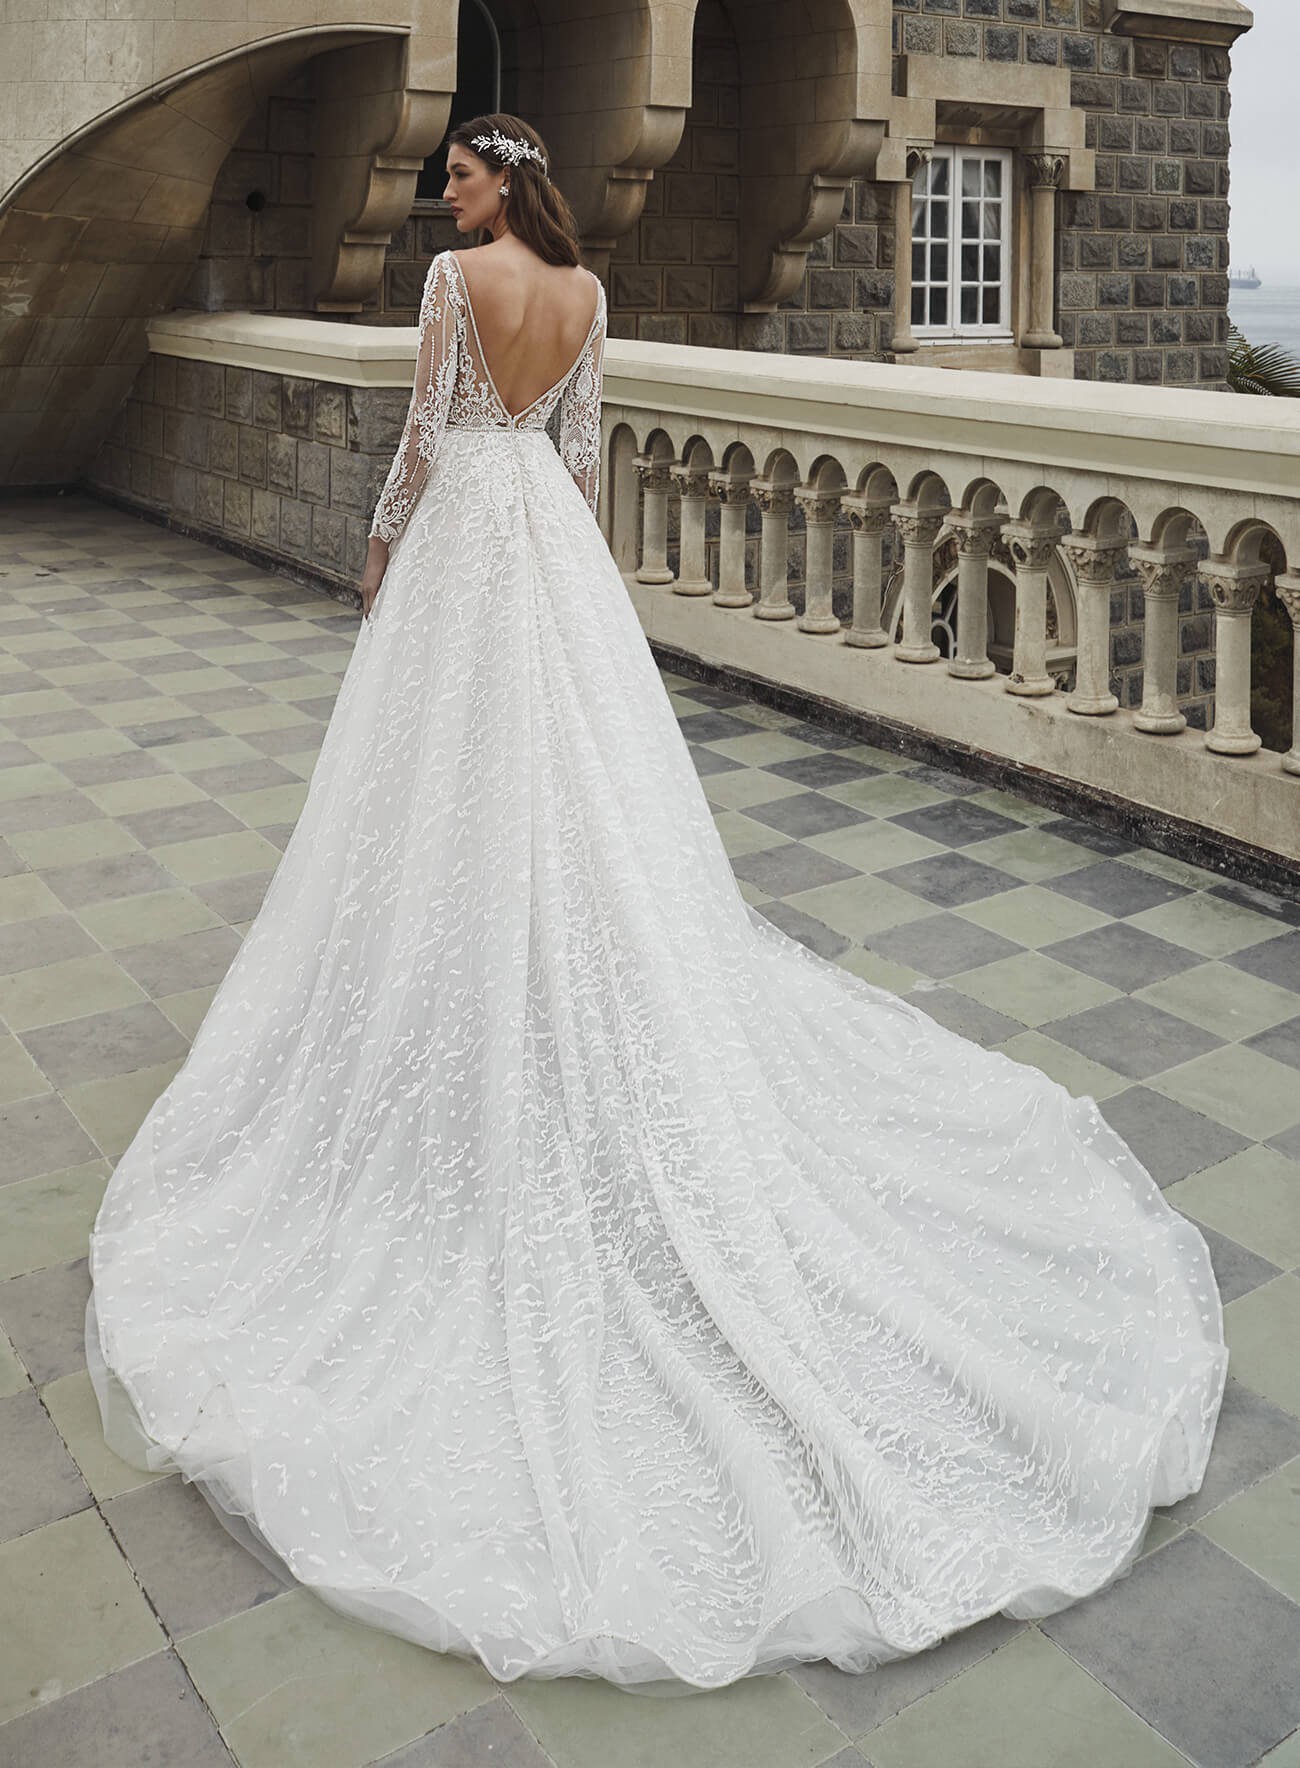 Calla Blanche Cynthia New Wedding Dress Save 23% - Stillwhite